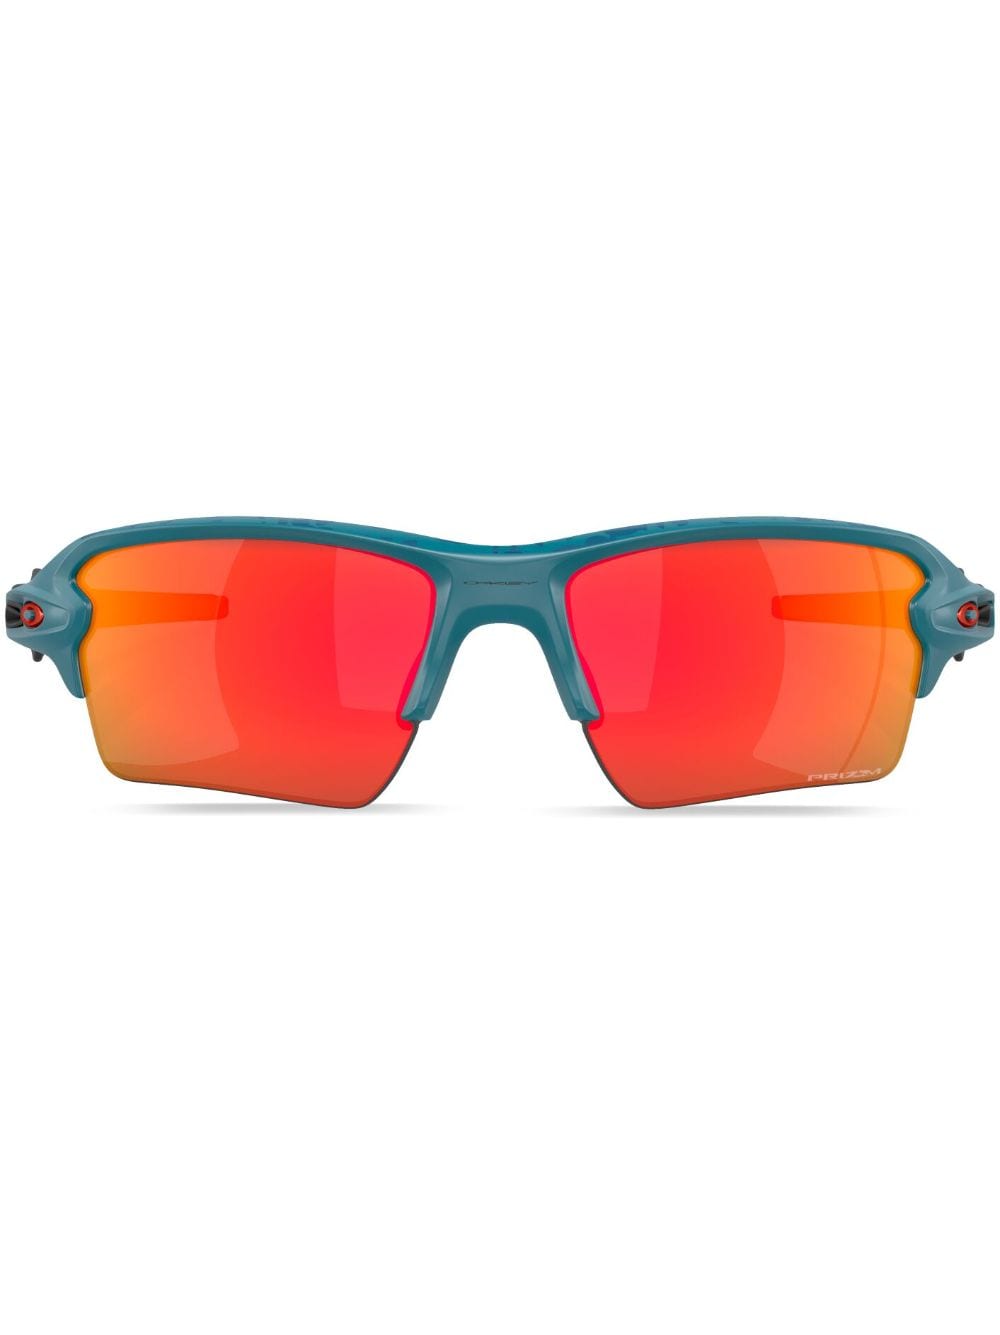 Flak 2.0 rectangle-frame sunglasses<BR/><BR/>